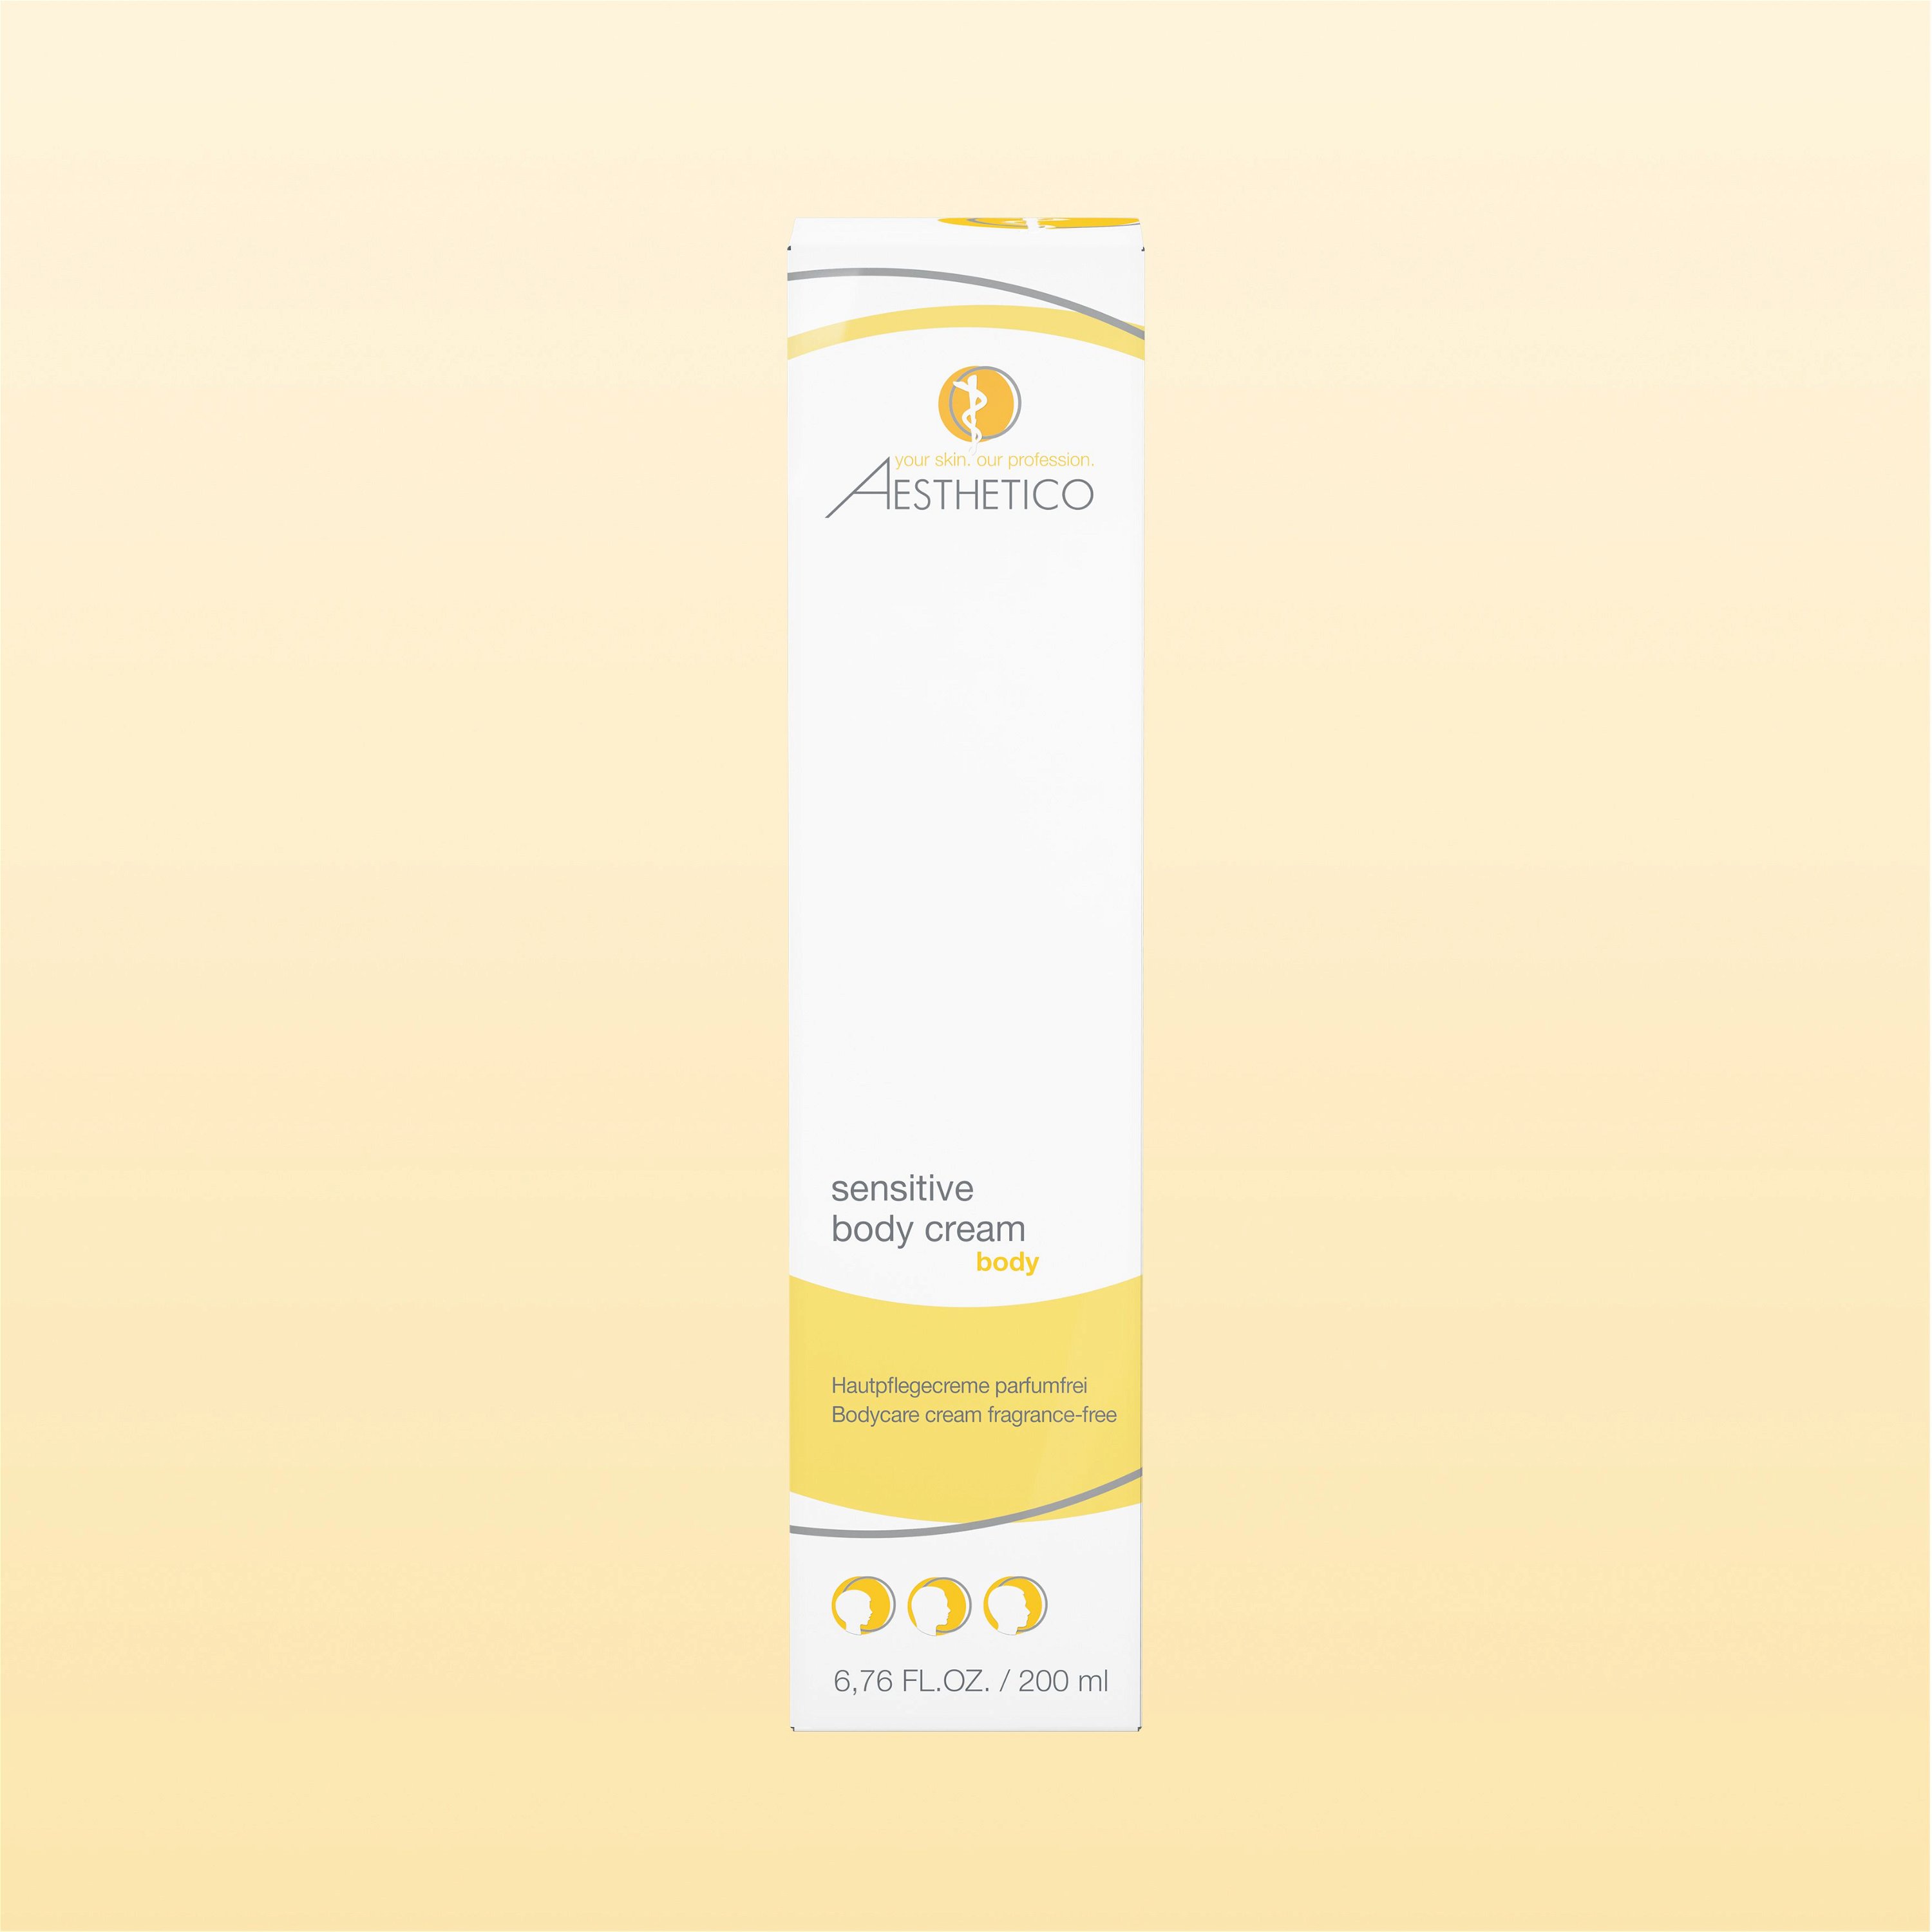 Umverpackung AESTHETICO sensitive body cream, 200ml